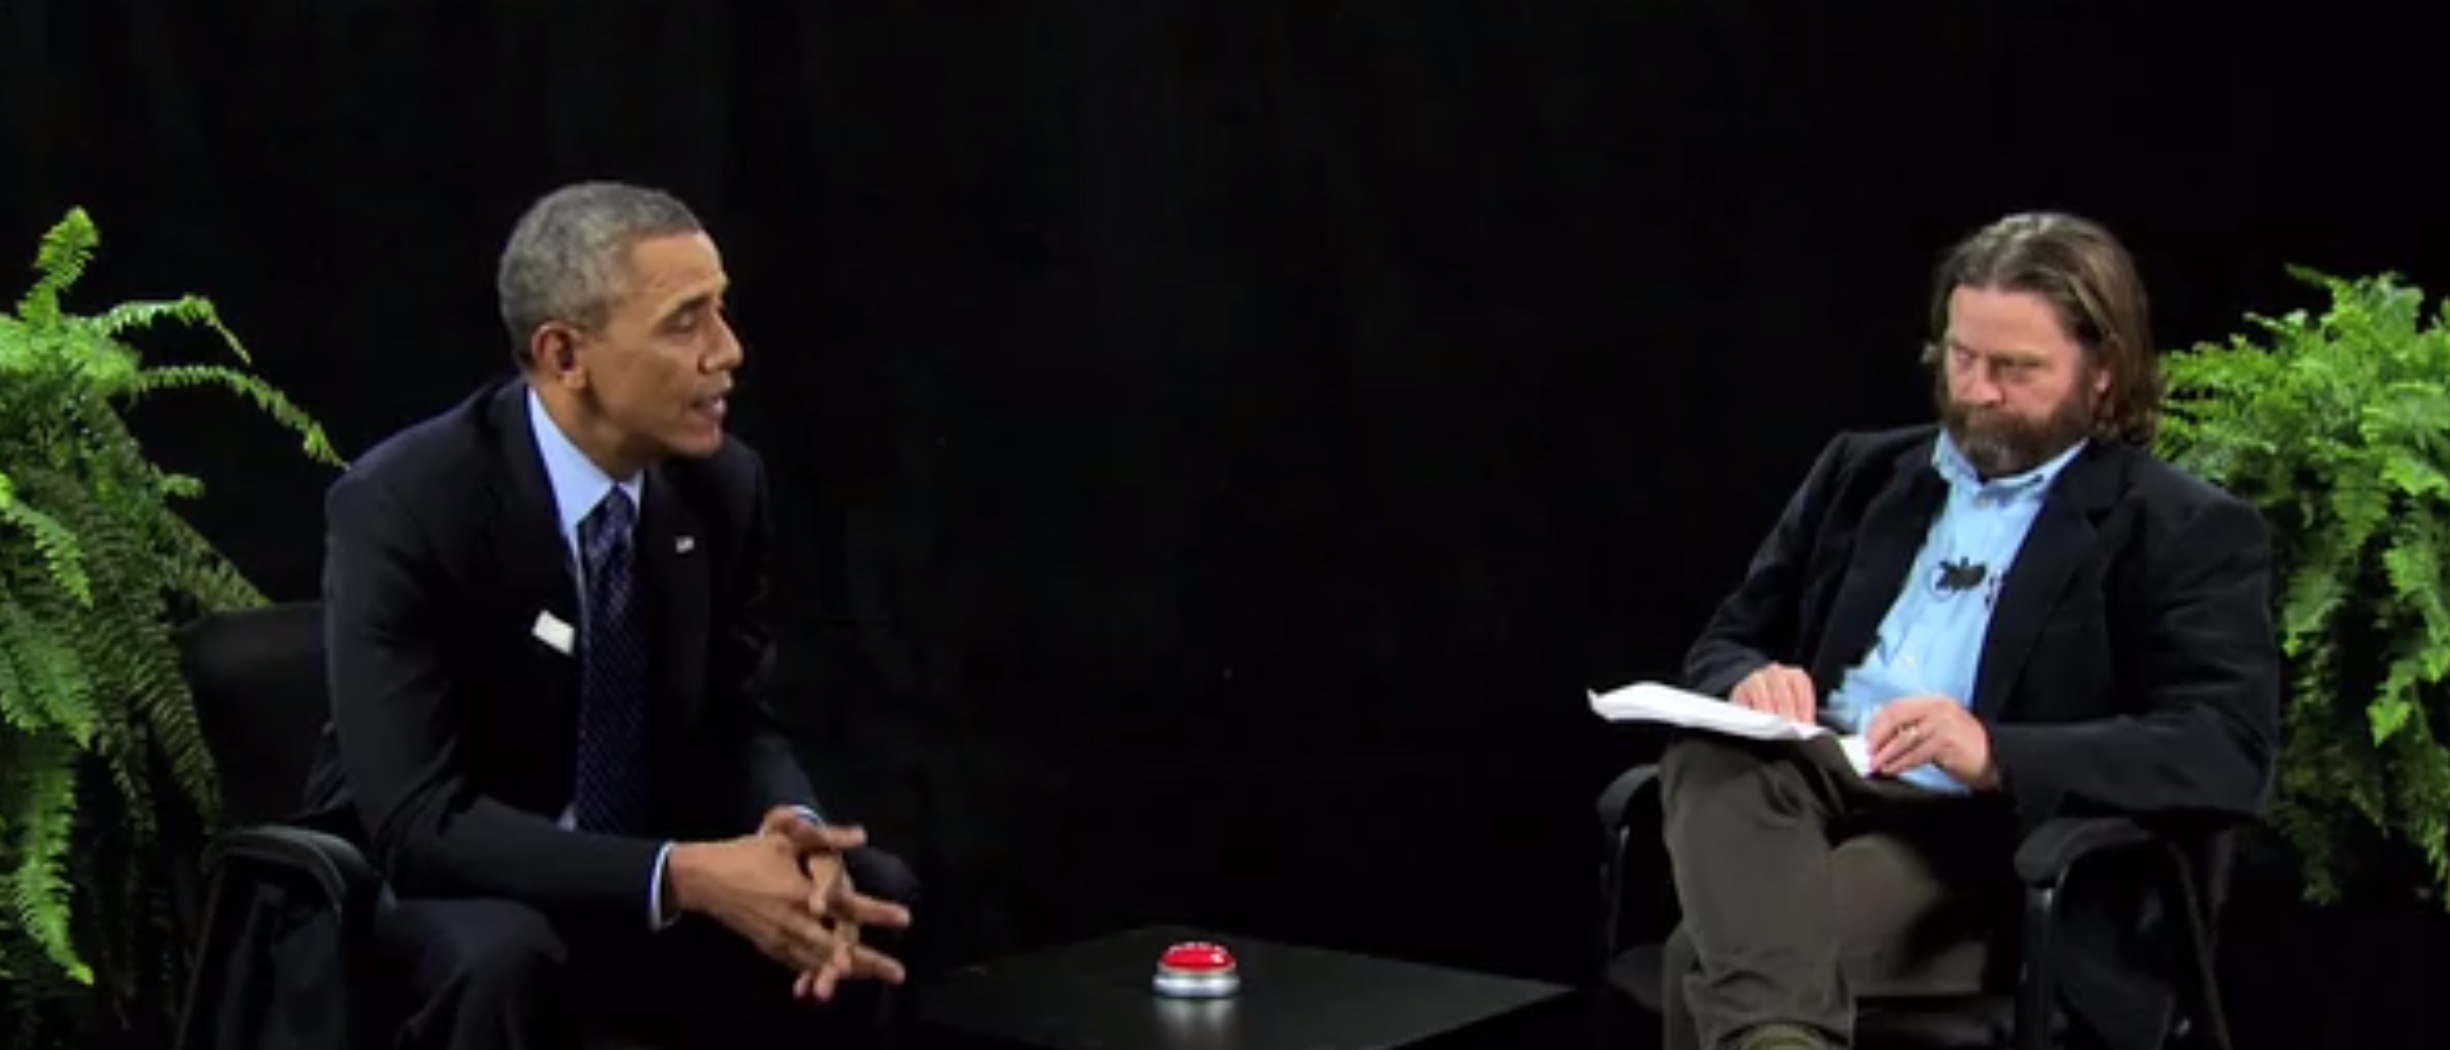 Barack Obama Between Two Ferns with Zach Galifianakis